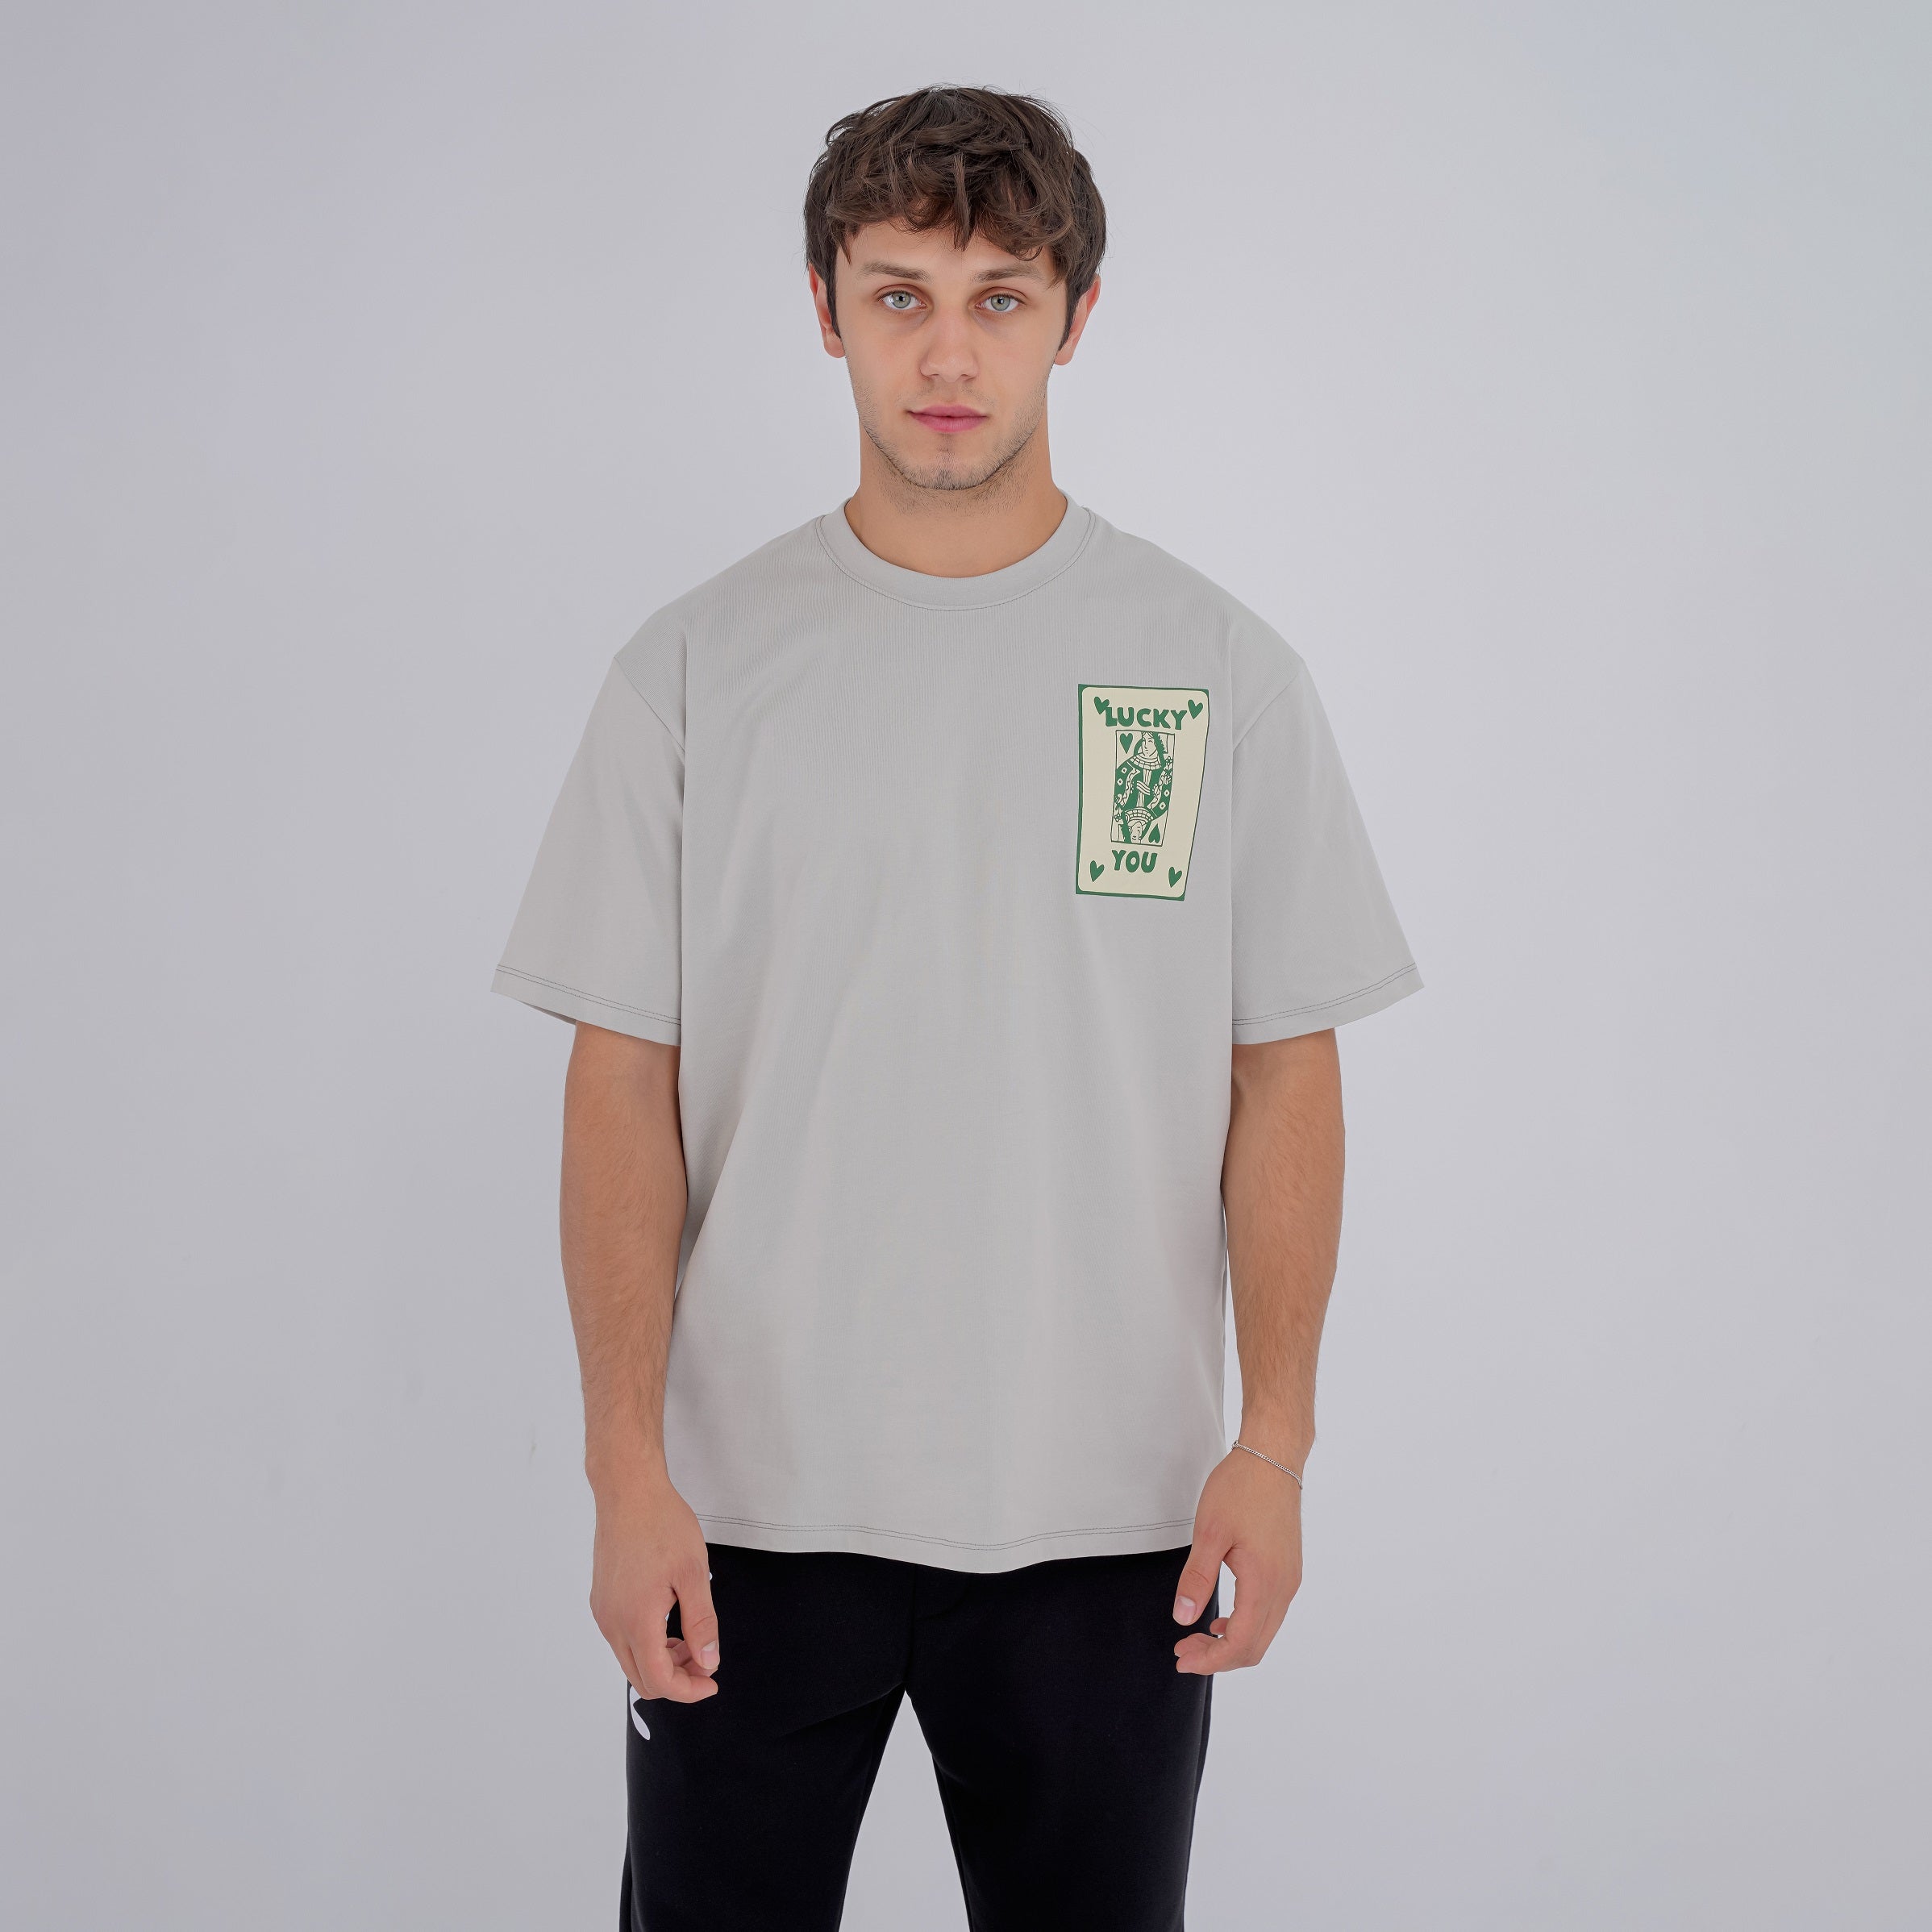 M24TH819 - Oversized Round neck, Printed T-shirt